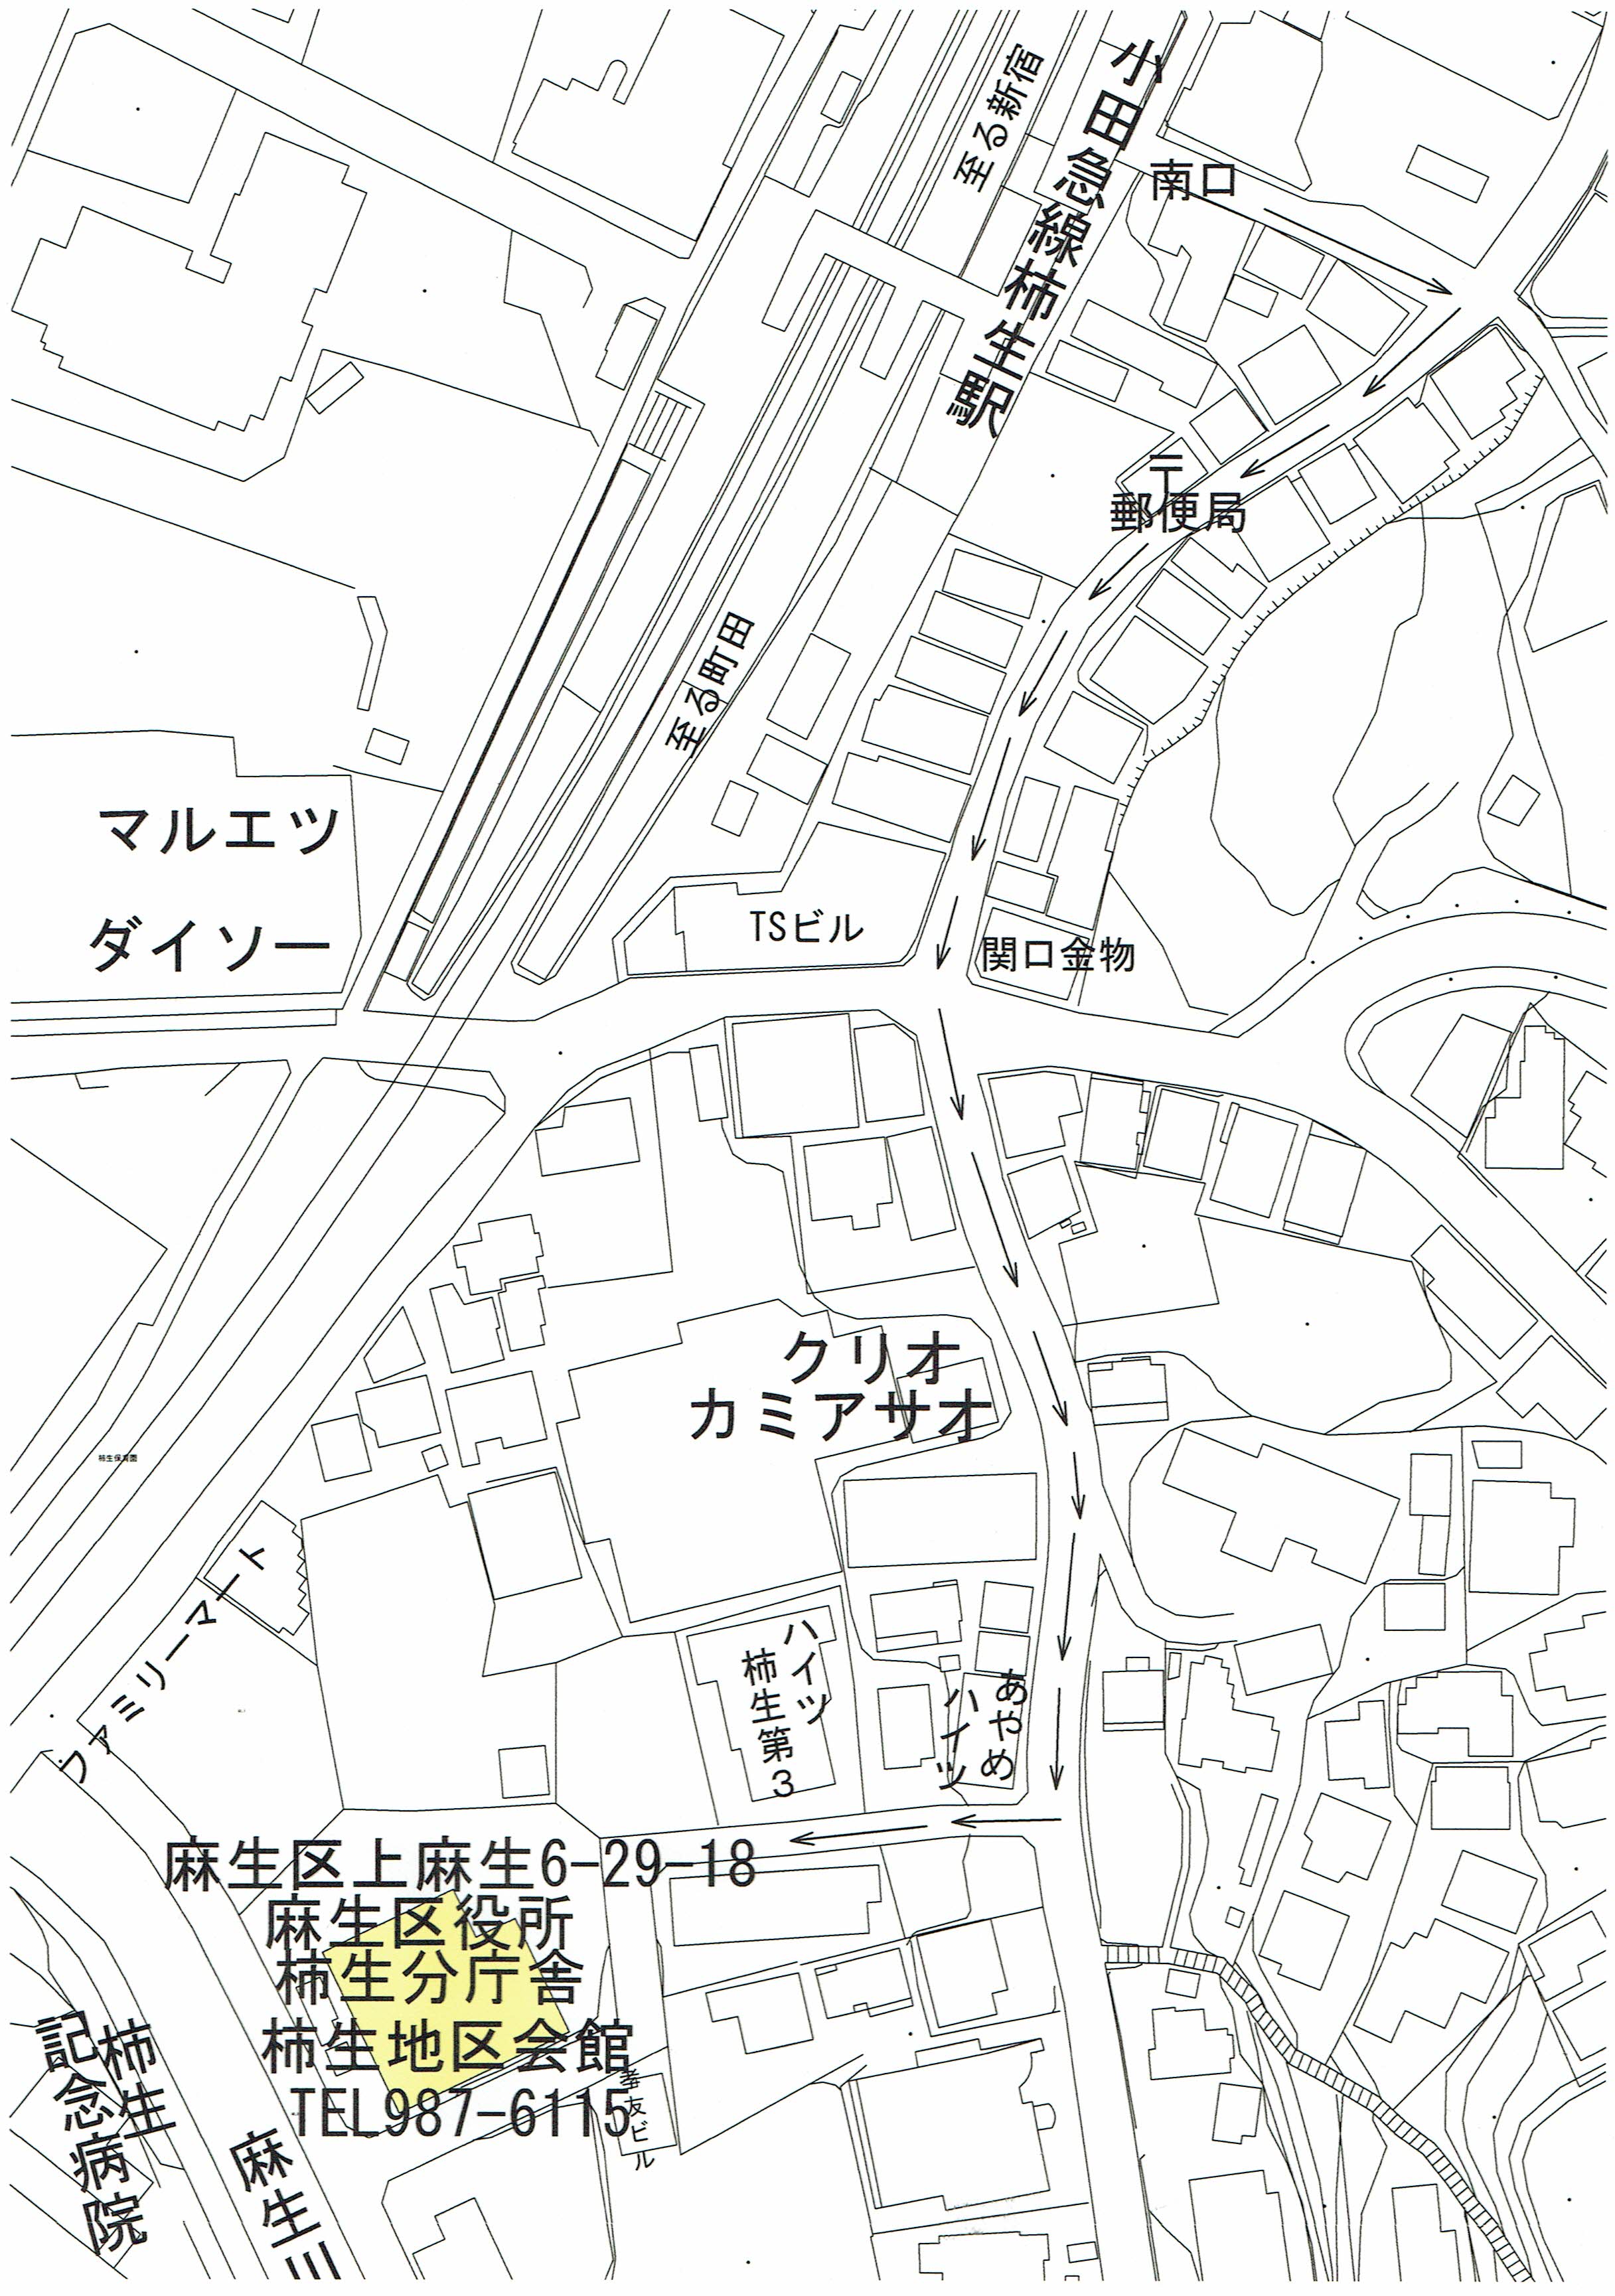 麻生区役所柿生分庁舎柿生地区会館への地図